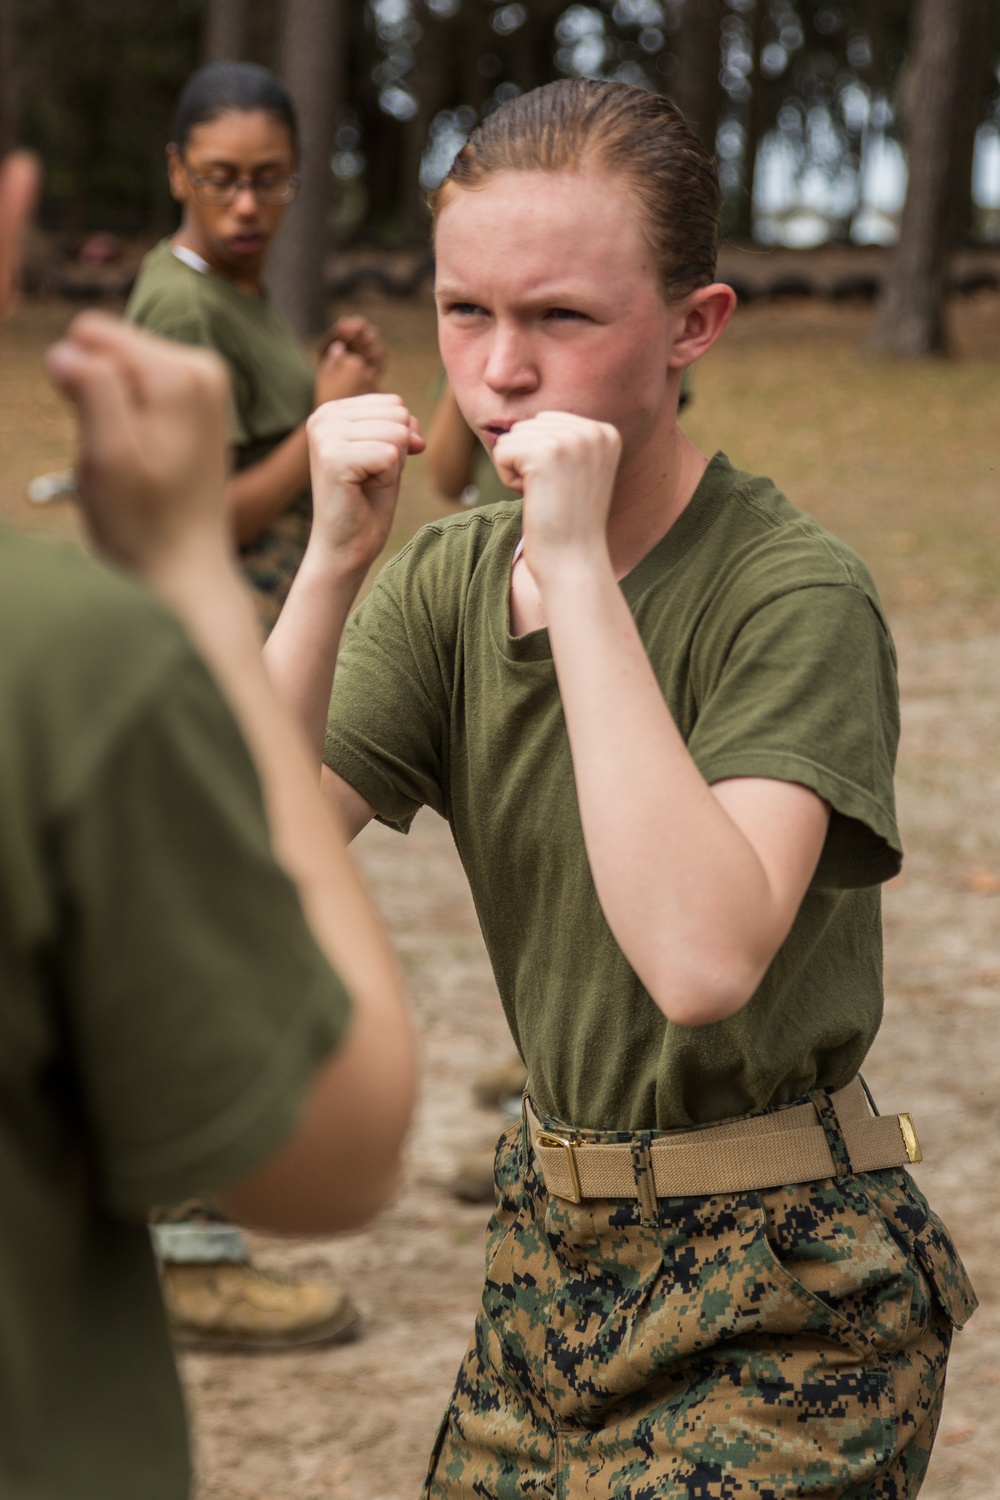 Cumming, Ga., native training at Parris Island to become U.S. Marine